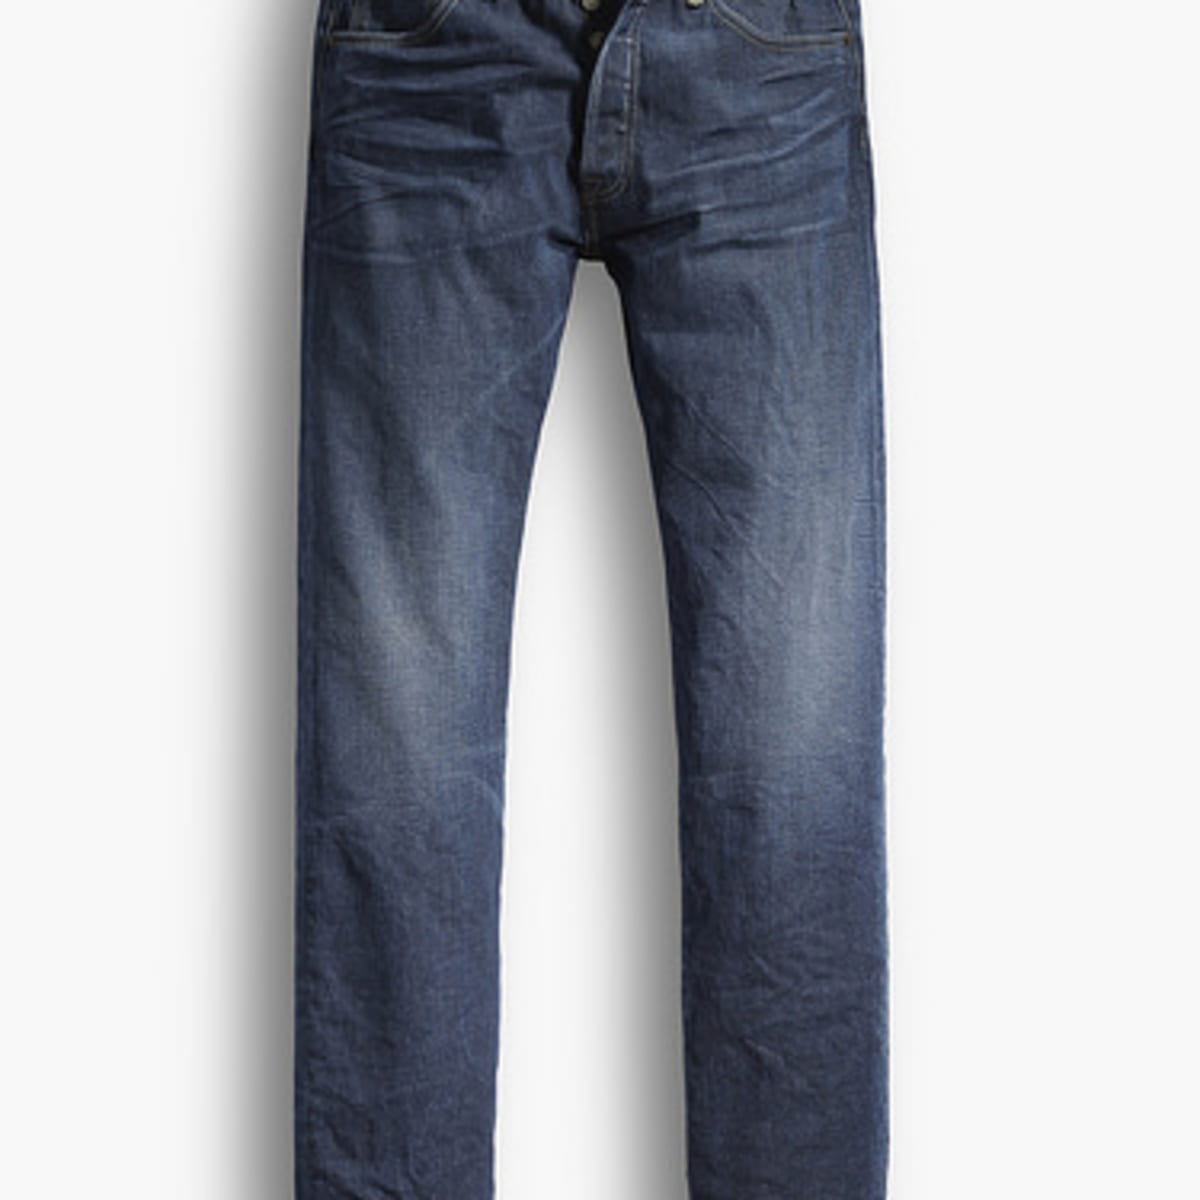 Introducir 75+ imagen levi’s stretch denim jeans